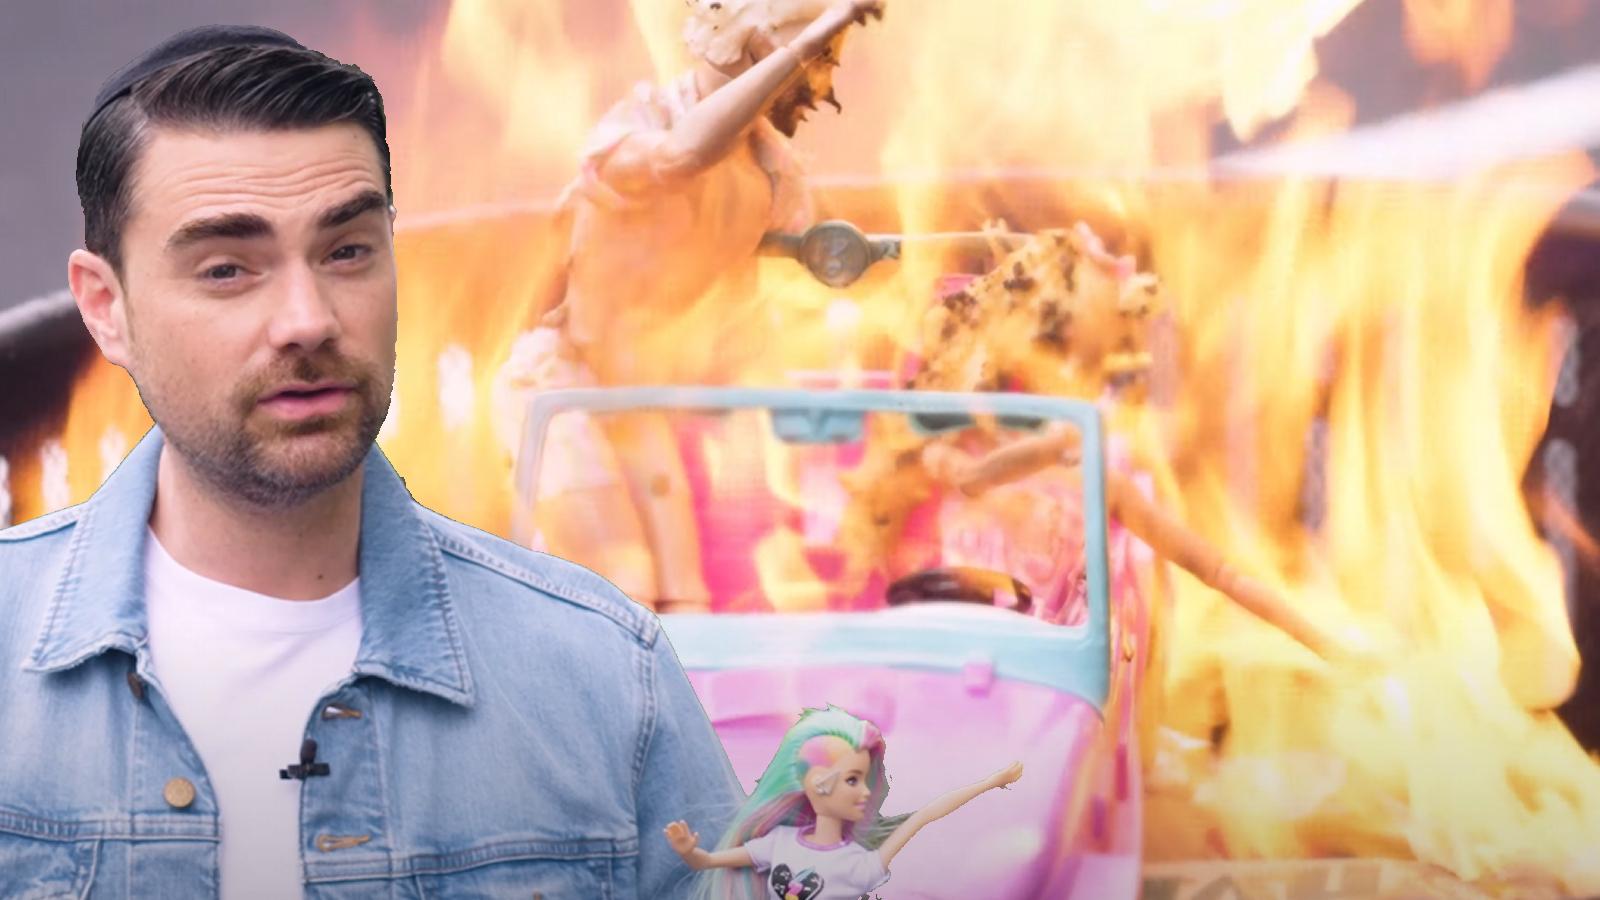 Internet roasts Ben Shapiro for burning dolls in protest of Barbie movie